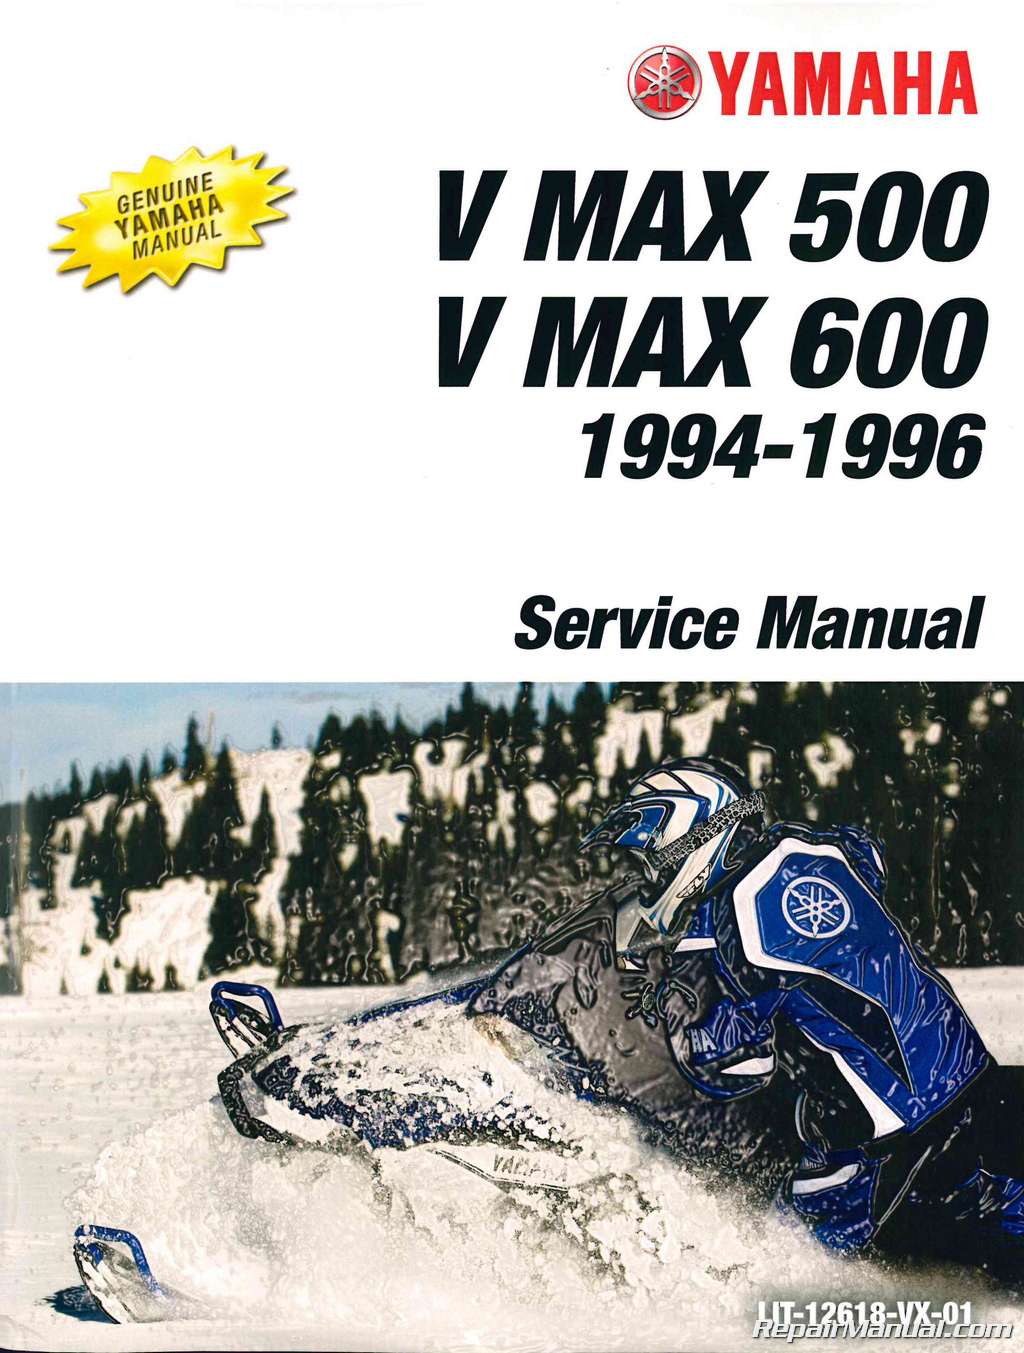 1995 yamaha vmax 600 repair manual